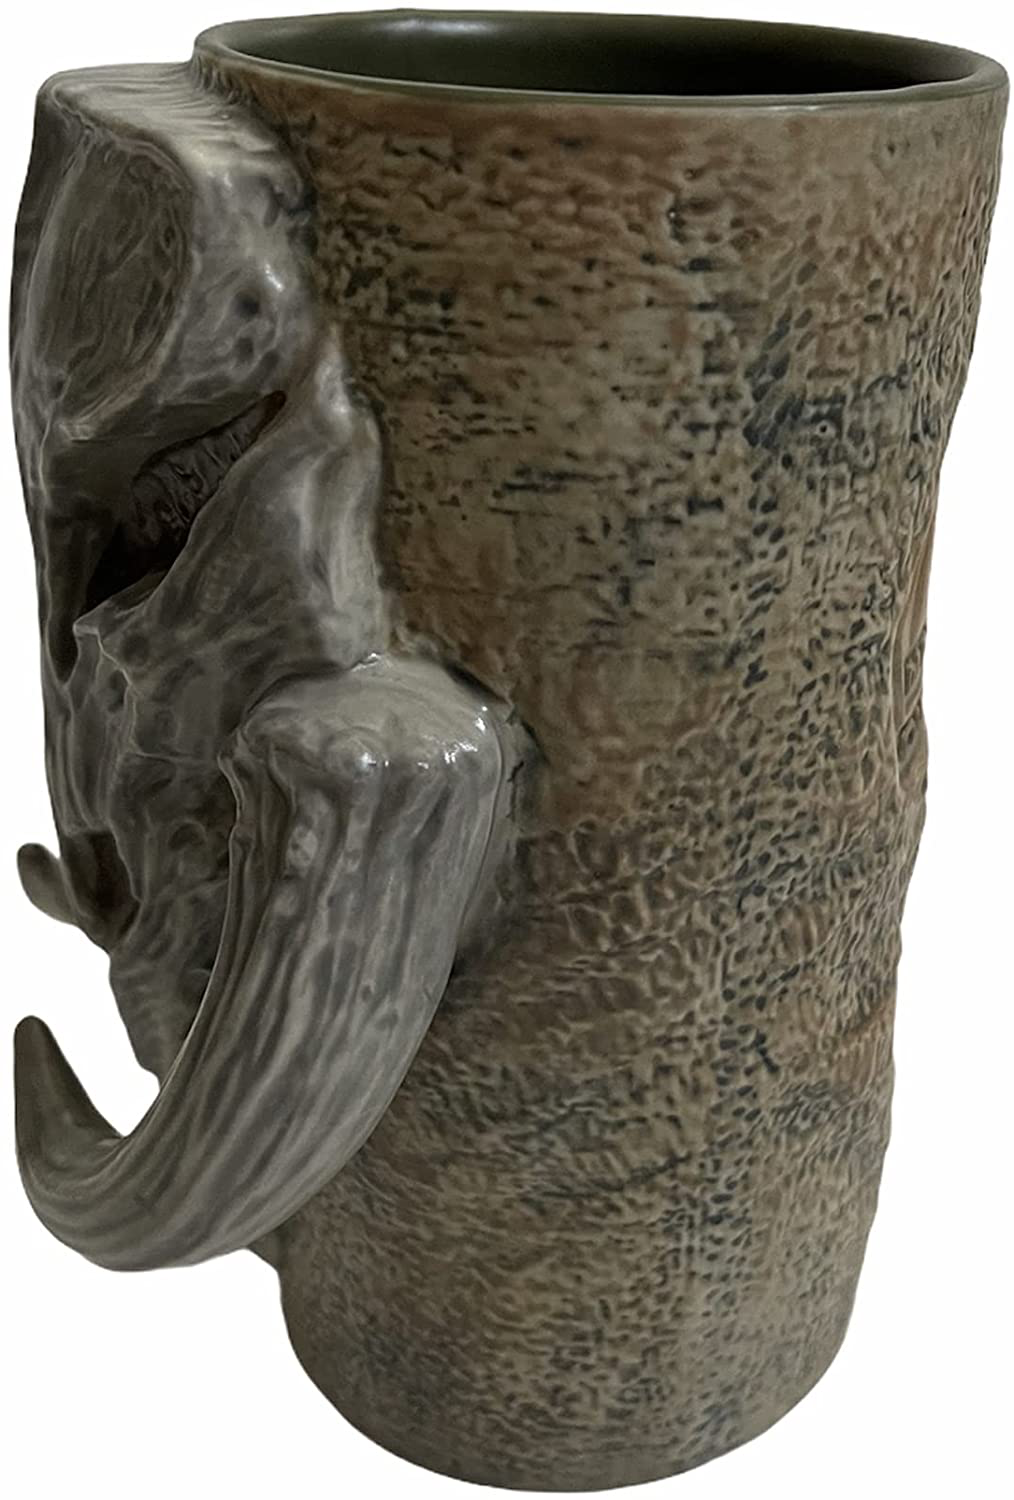 SWGE Boba Fett Mythosaur Skull Mug Cup 2